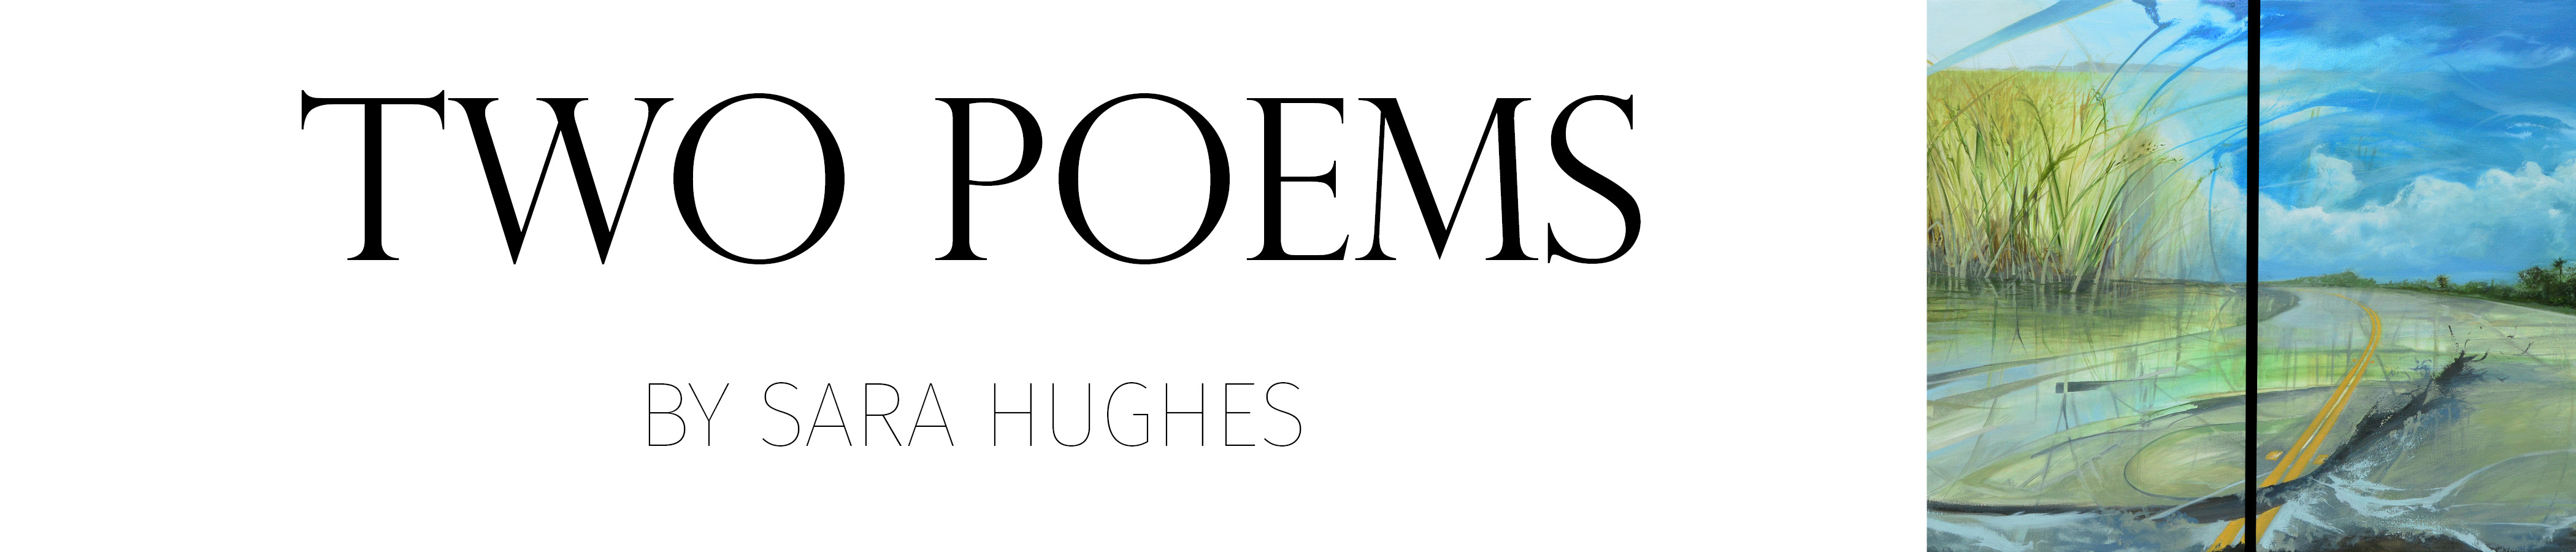 poetry-hughes